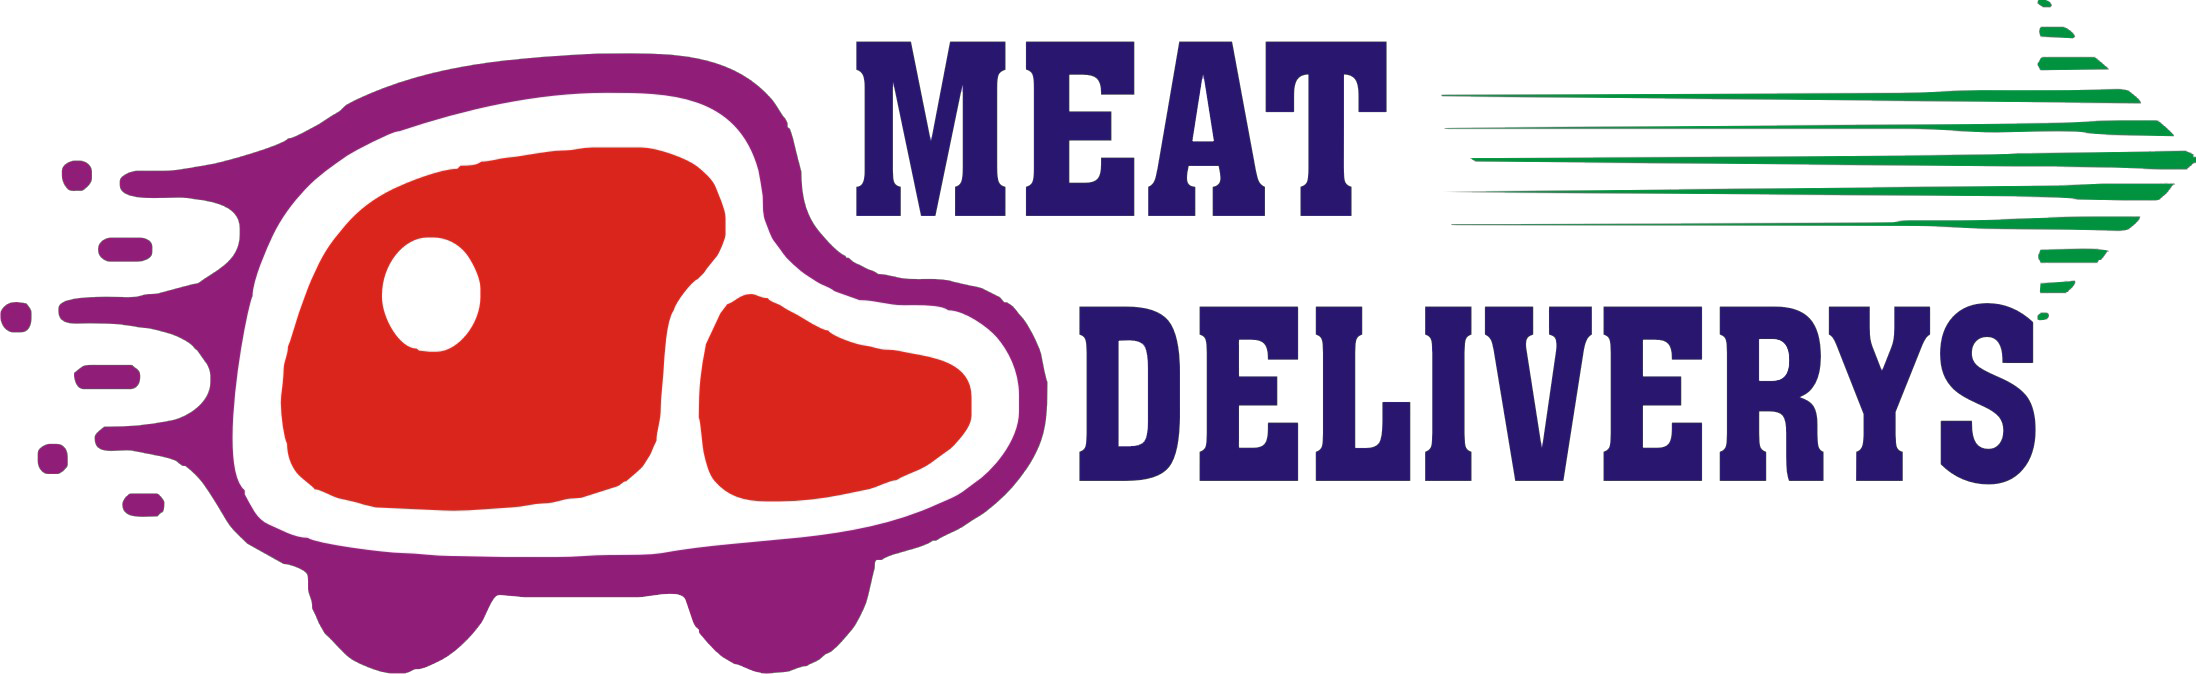 Meatdeliverys